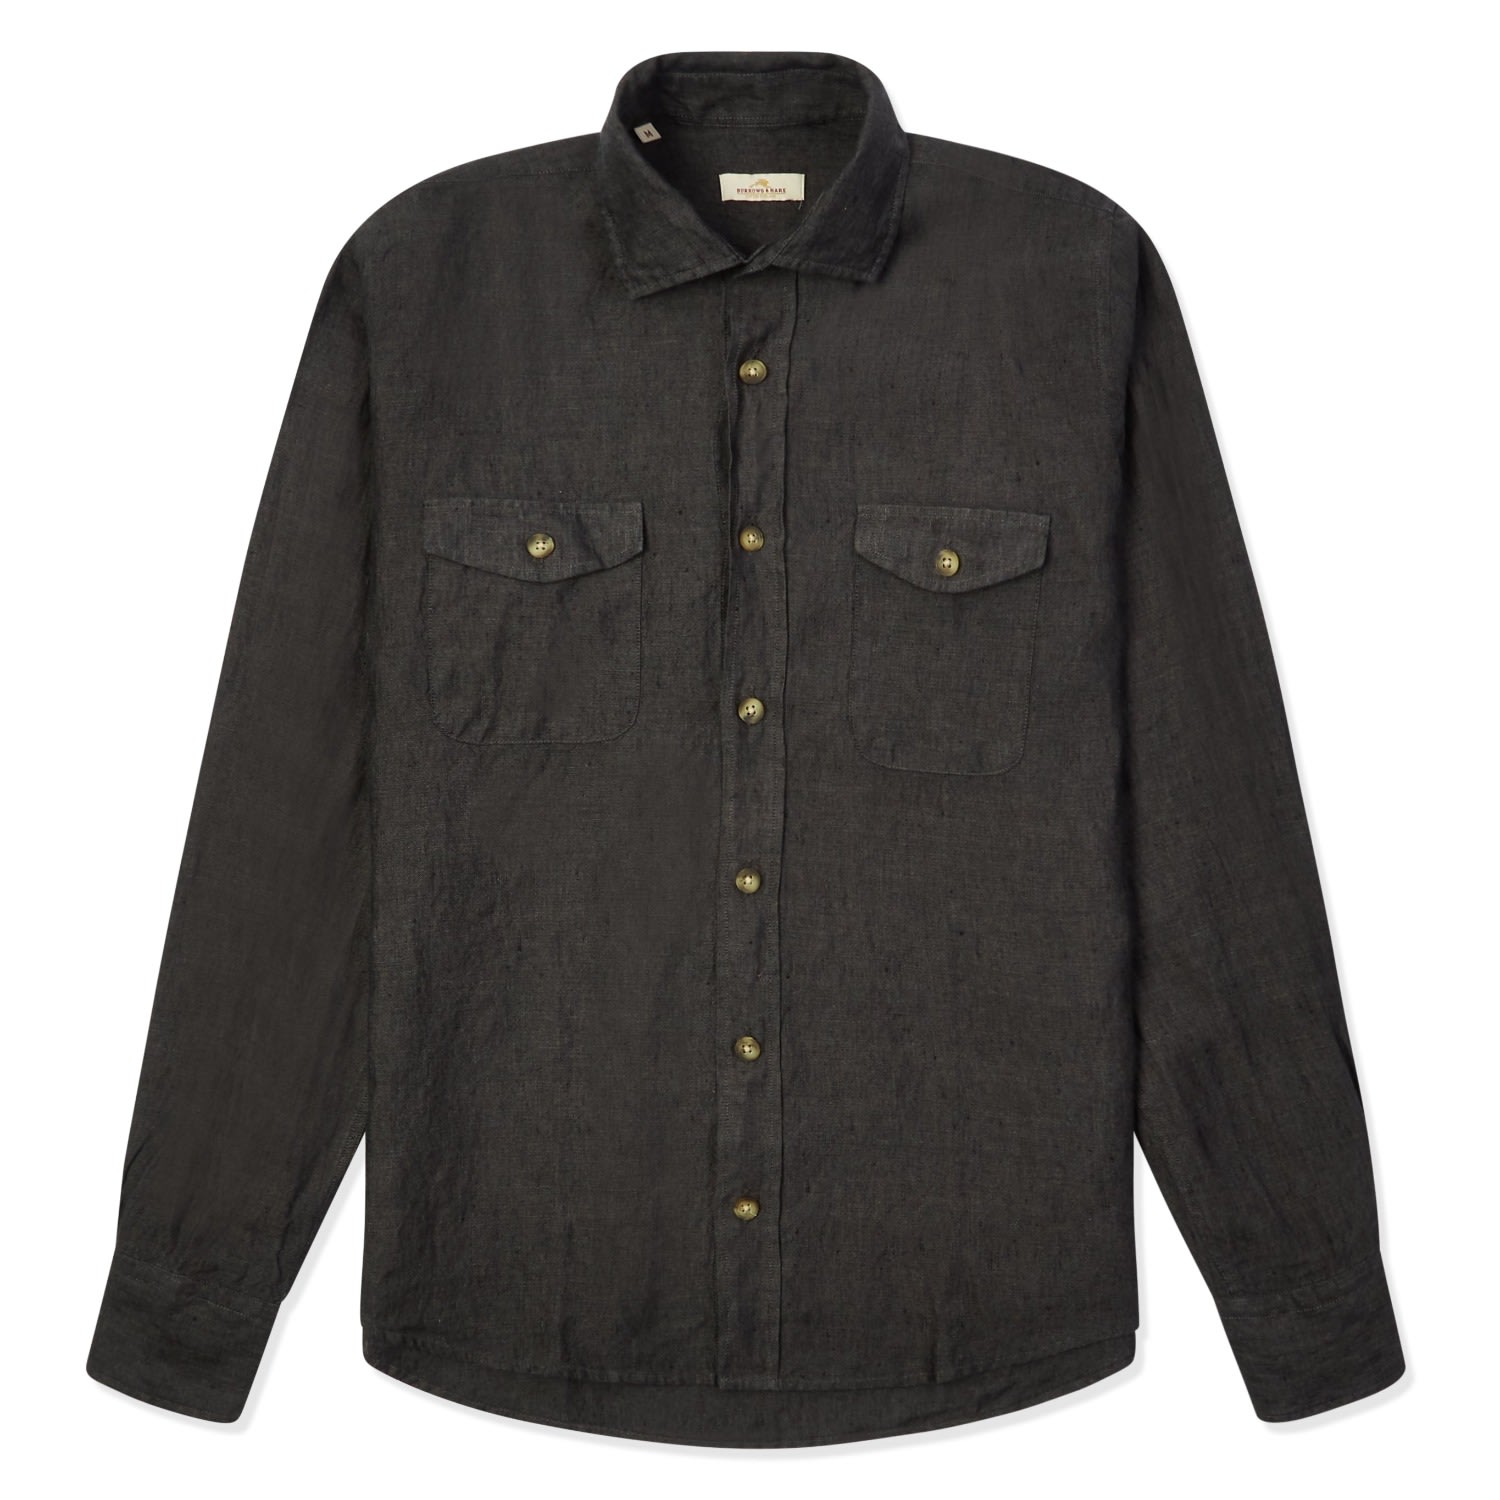 Men's Black Linen Pockets Shirt - Charcoal Large Burrows & Hare